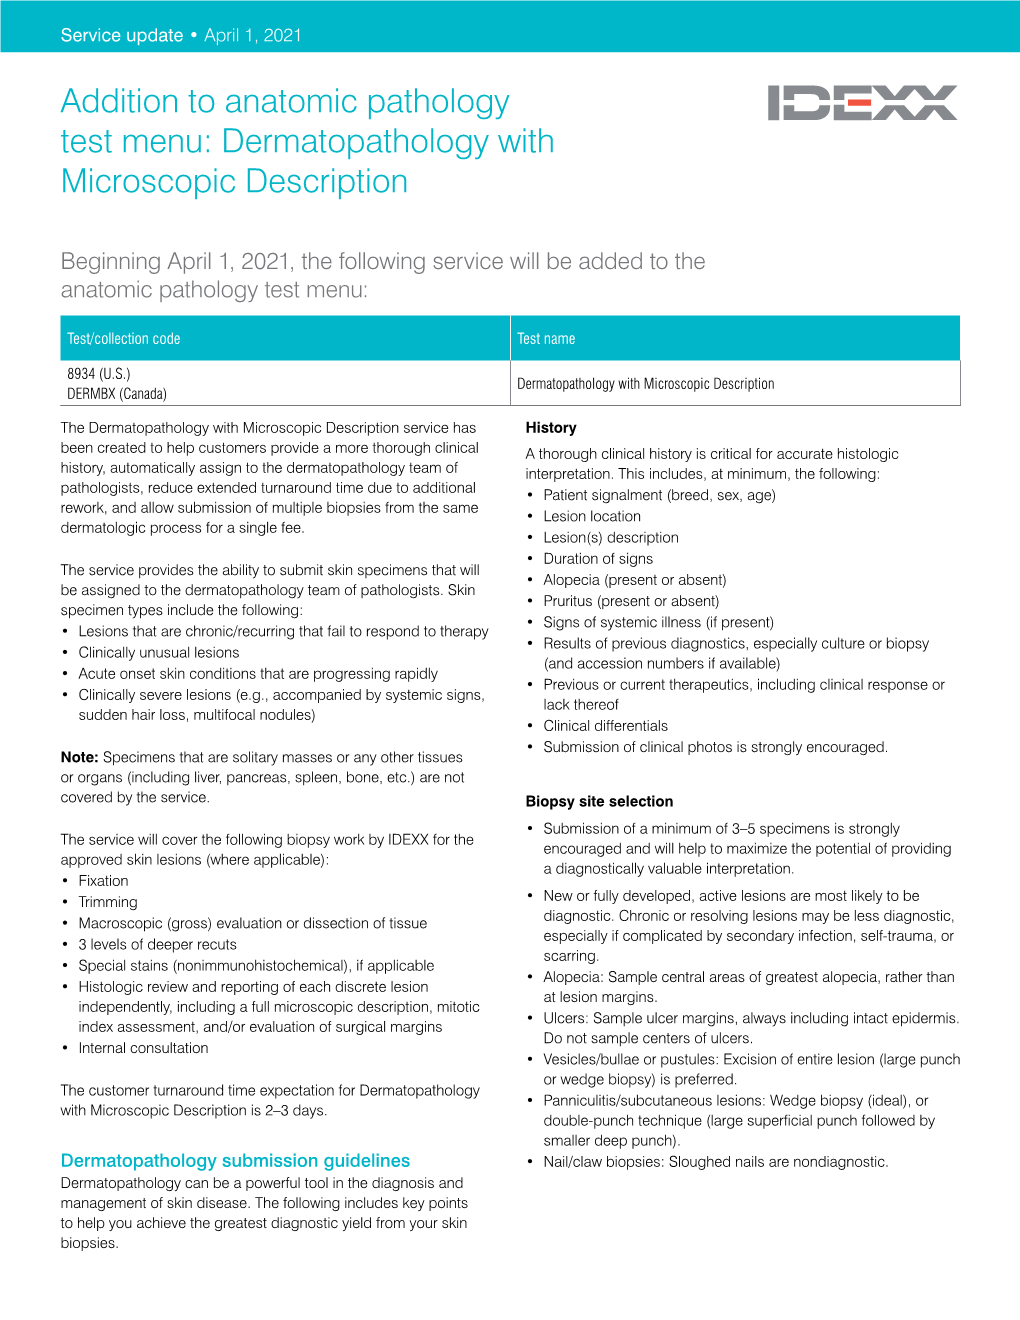 Addition to Anatomic Pathology Test Menu: Dermatopathology with Microscopic Description